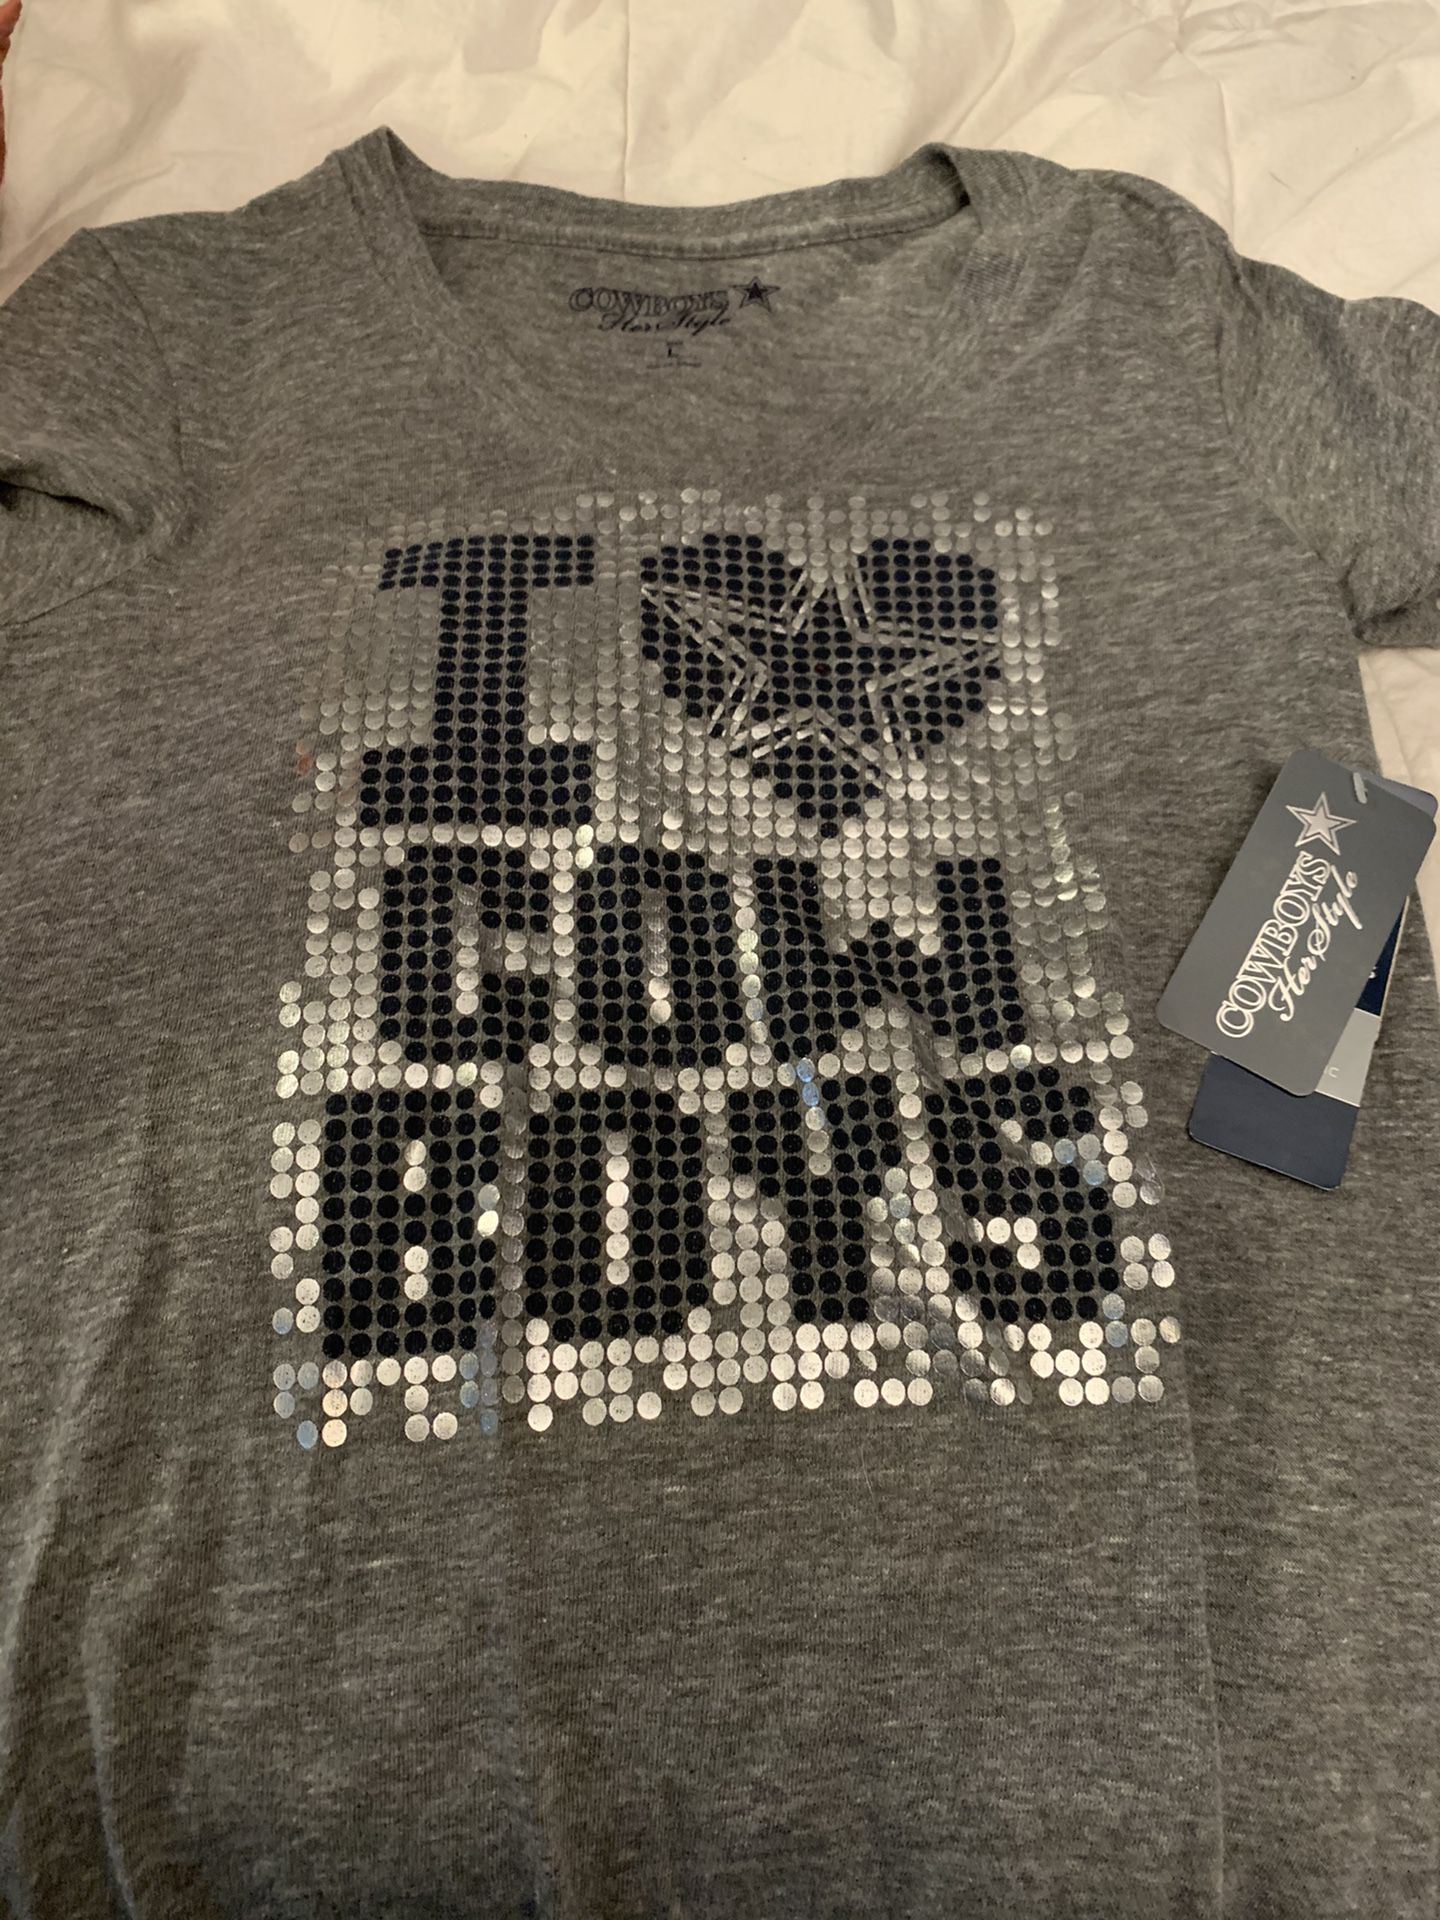 Boys Jordan Shirts for Sale in San Antonio, TX - OfferUp